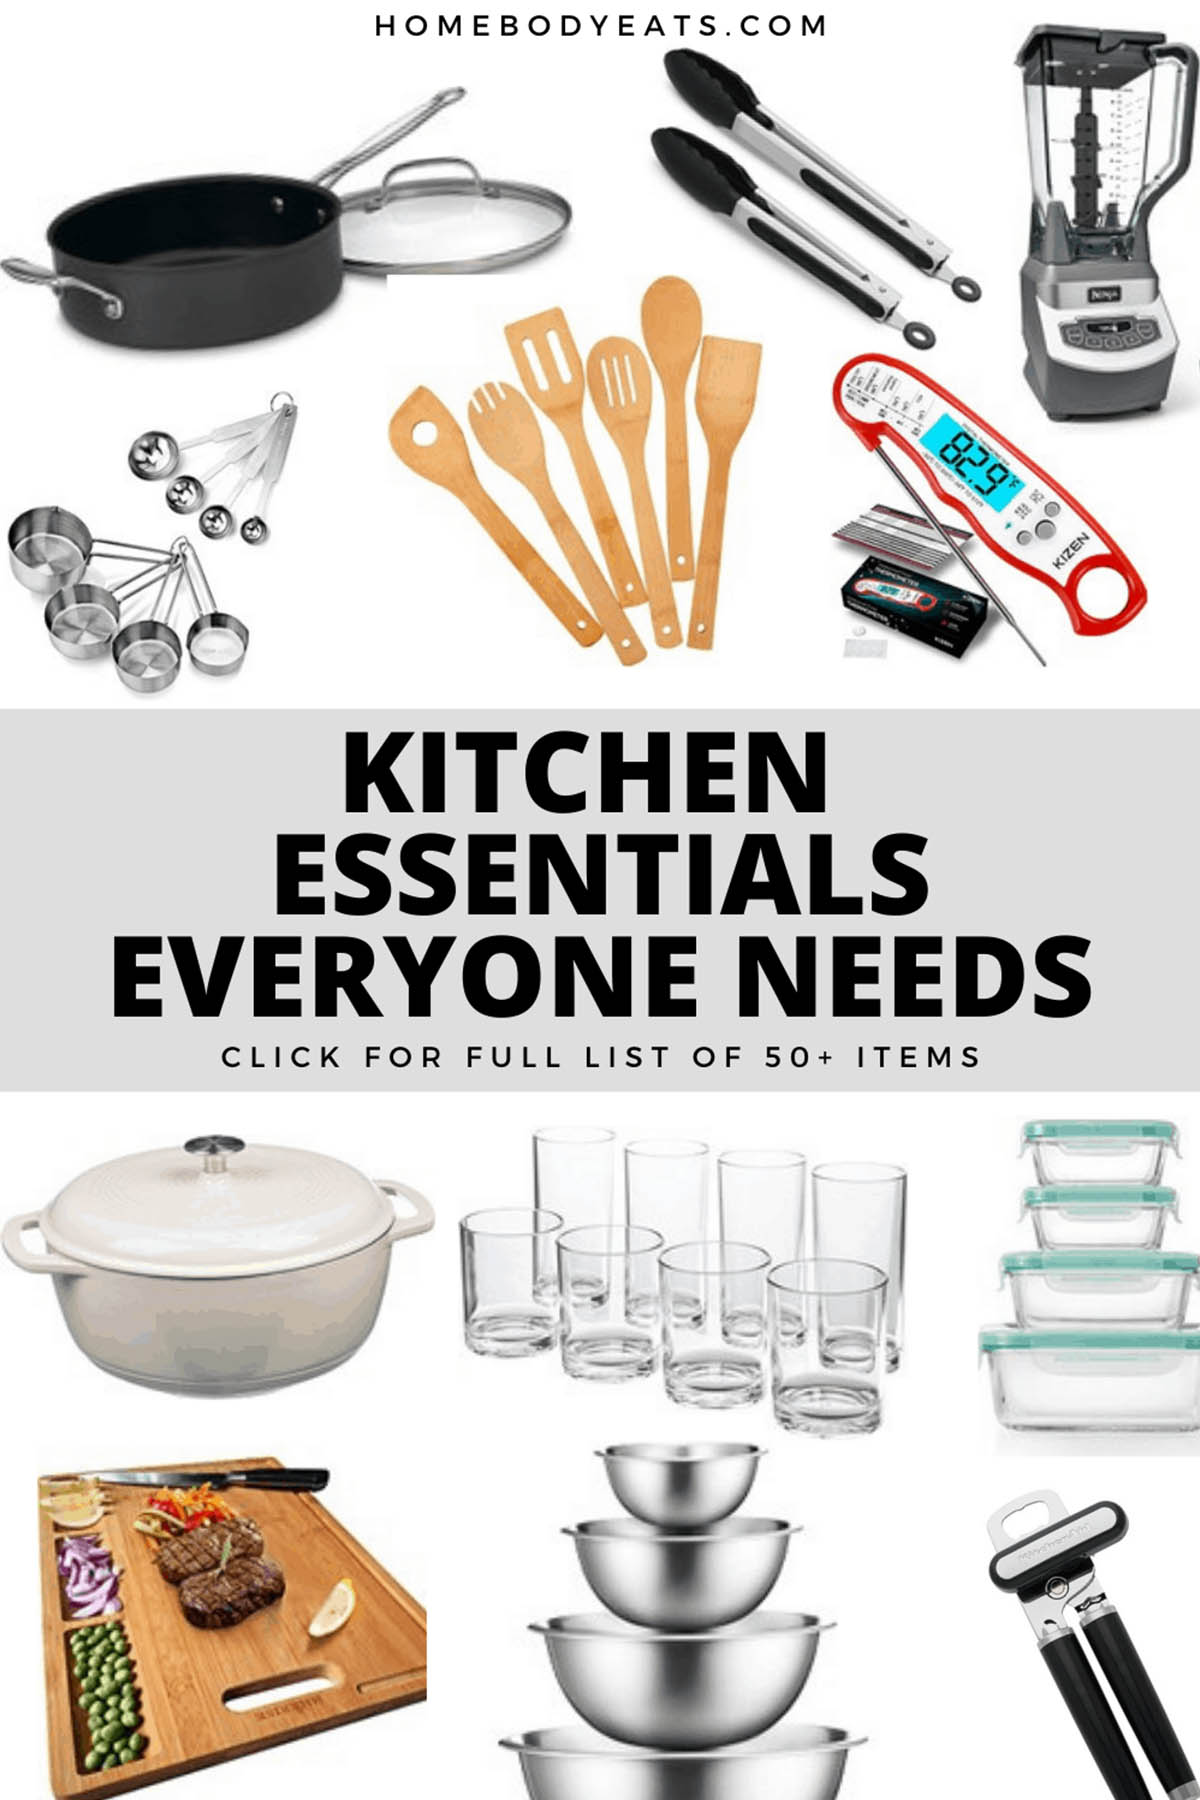 https://homebodyeats.com/wp-content/uploads/2020/10/kitchen-essentials-i-need.jpg